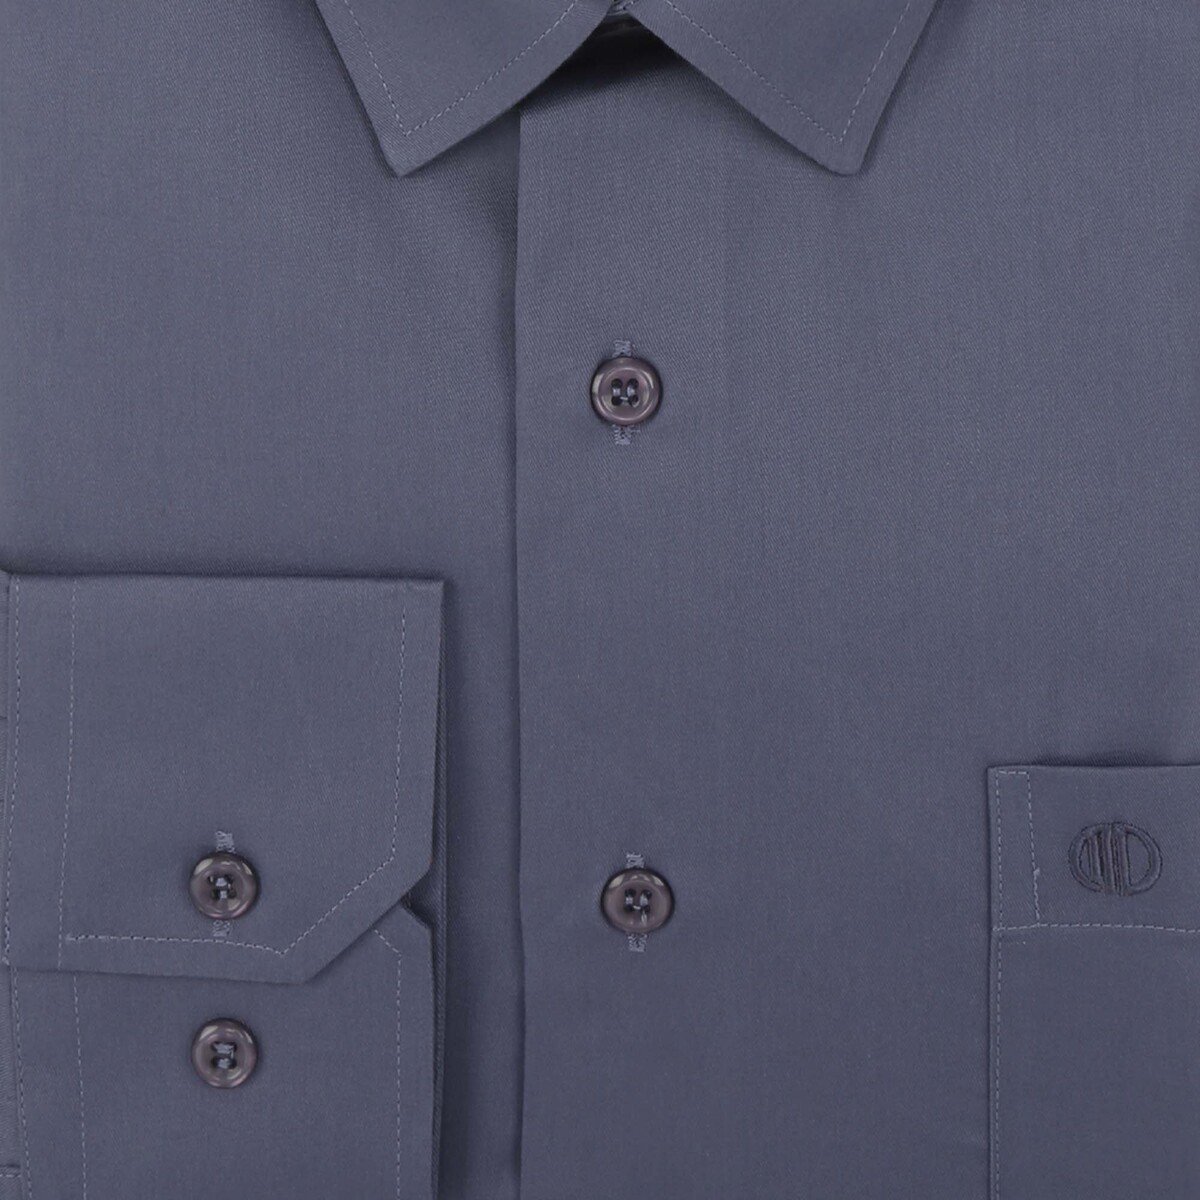 Marco Donateli Men's Formal Shirt Solid Slate Grey, 44